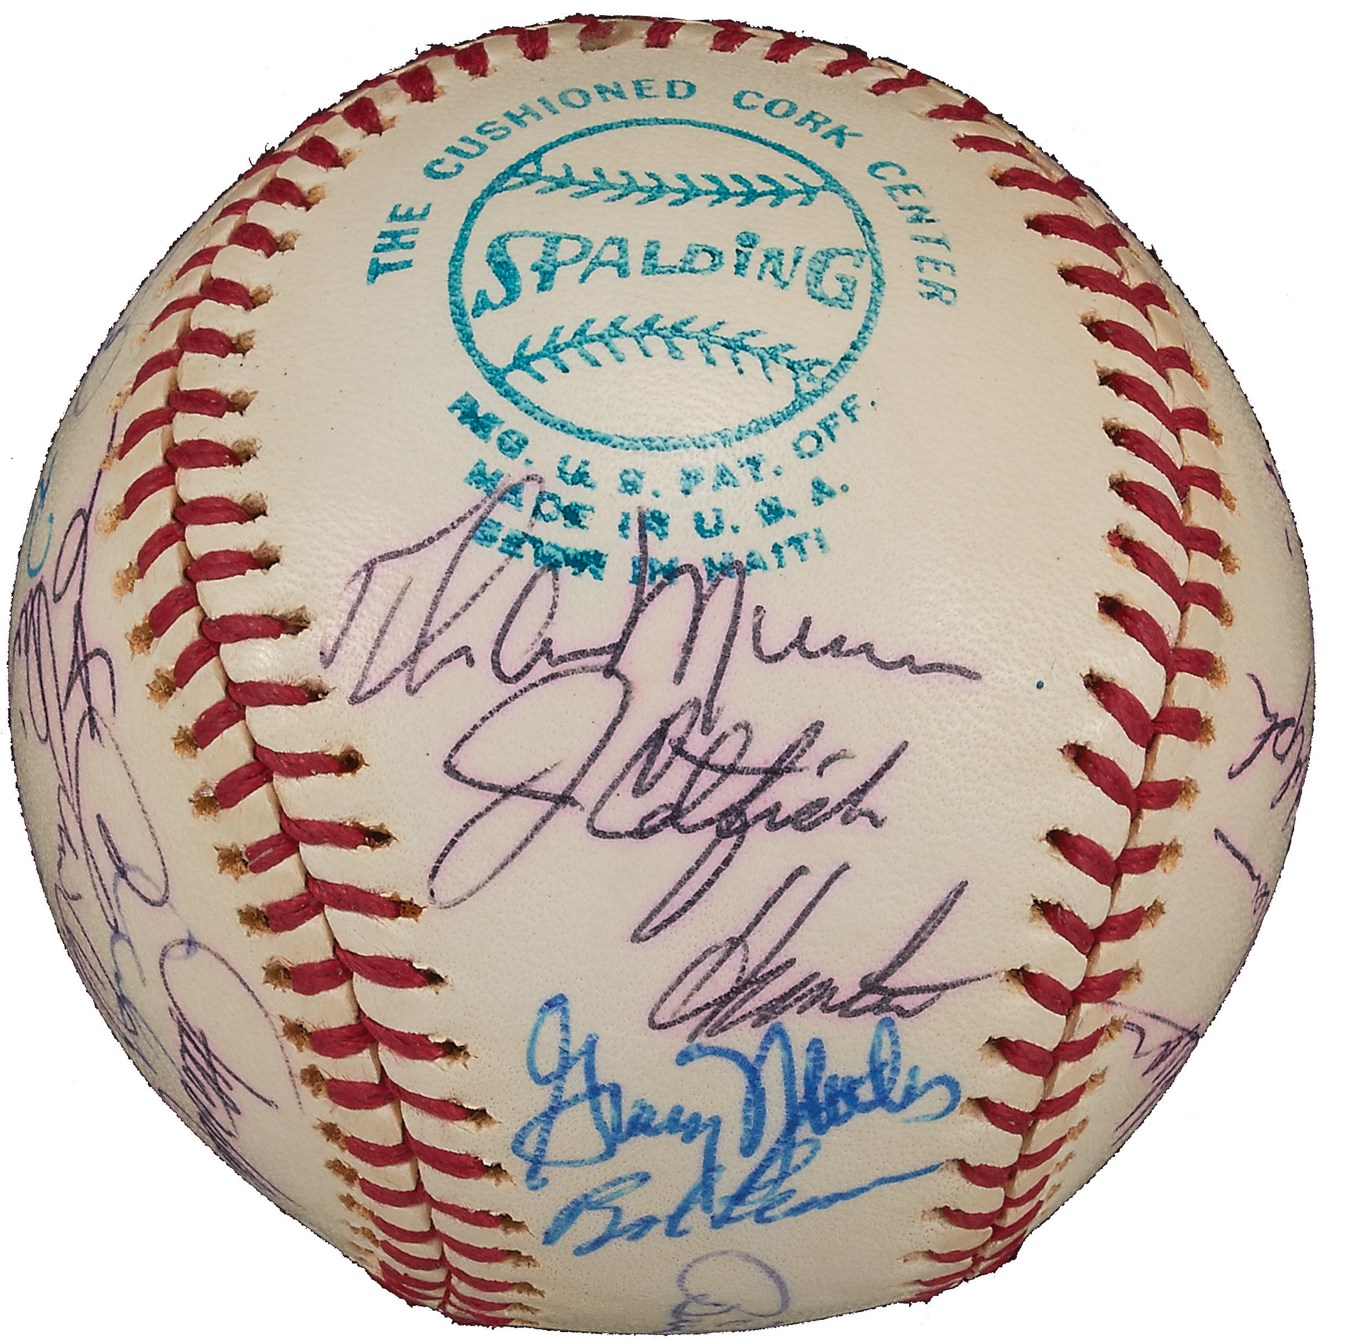 NY Yankees, Giants & Mets - 1976 New York Yankees Team-Signed Baseball with MVP Thurman Munson (PSA)